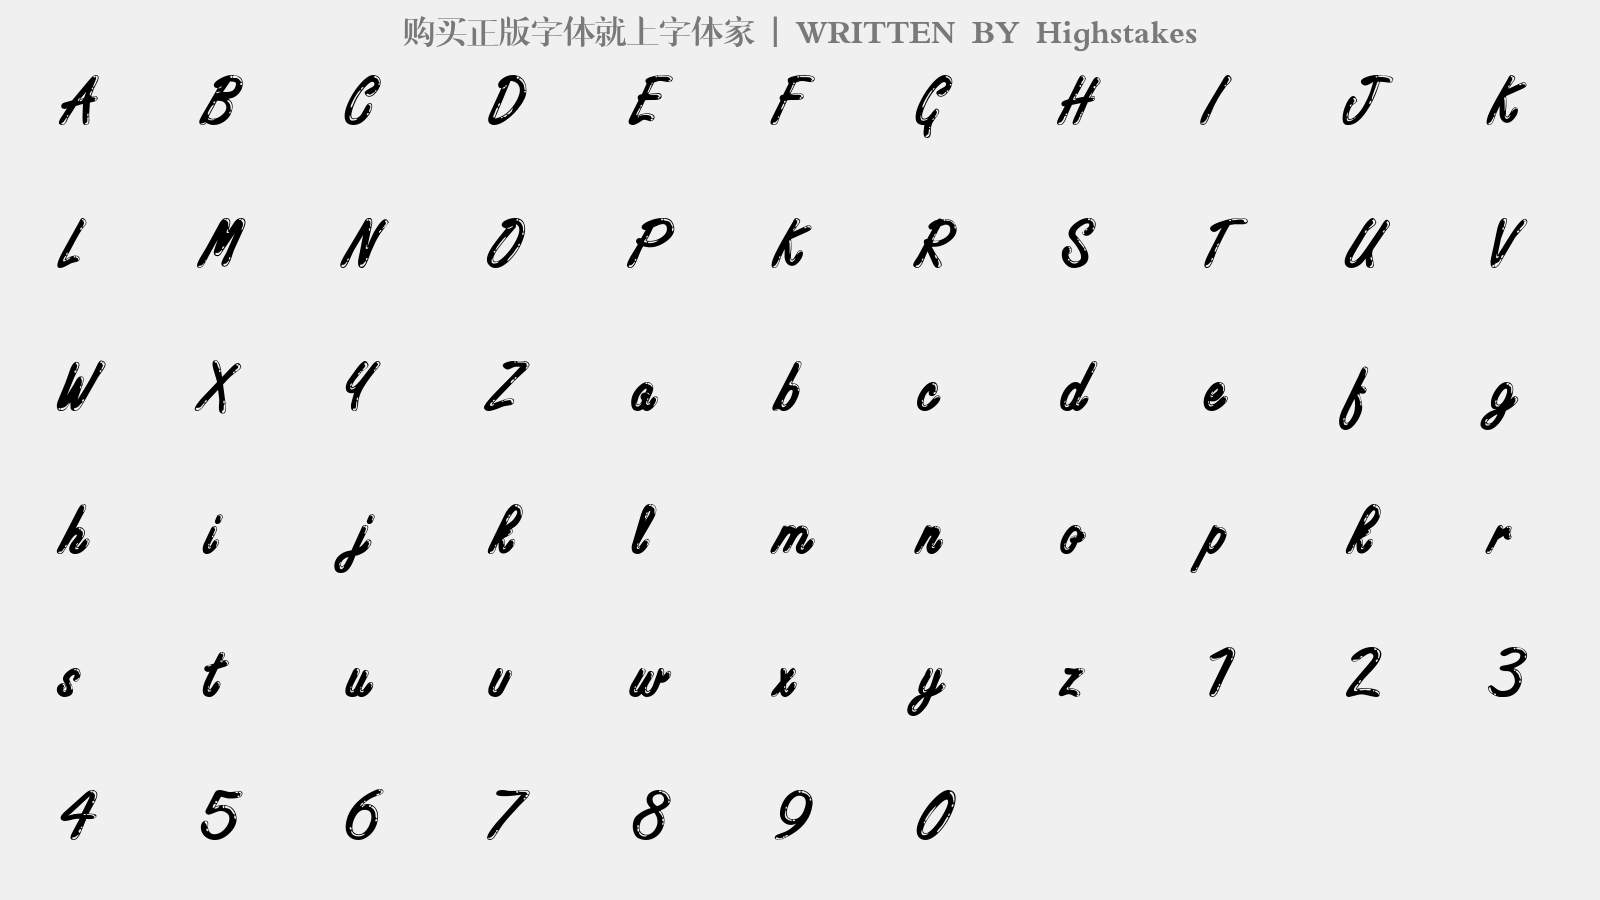 Highstakes - 大写字母/小写字母/数字